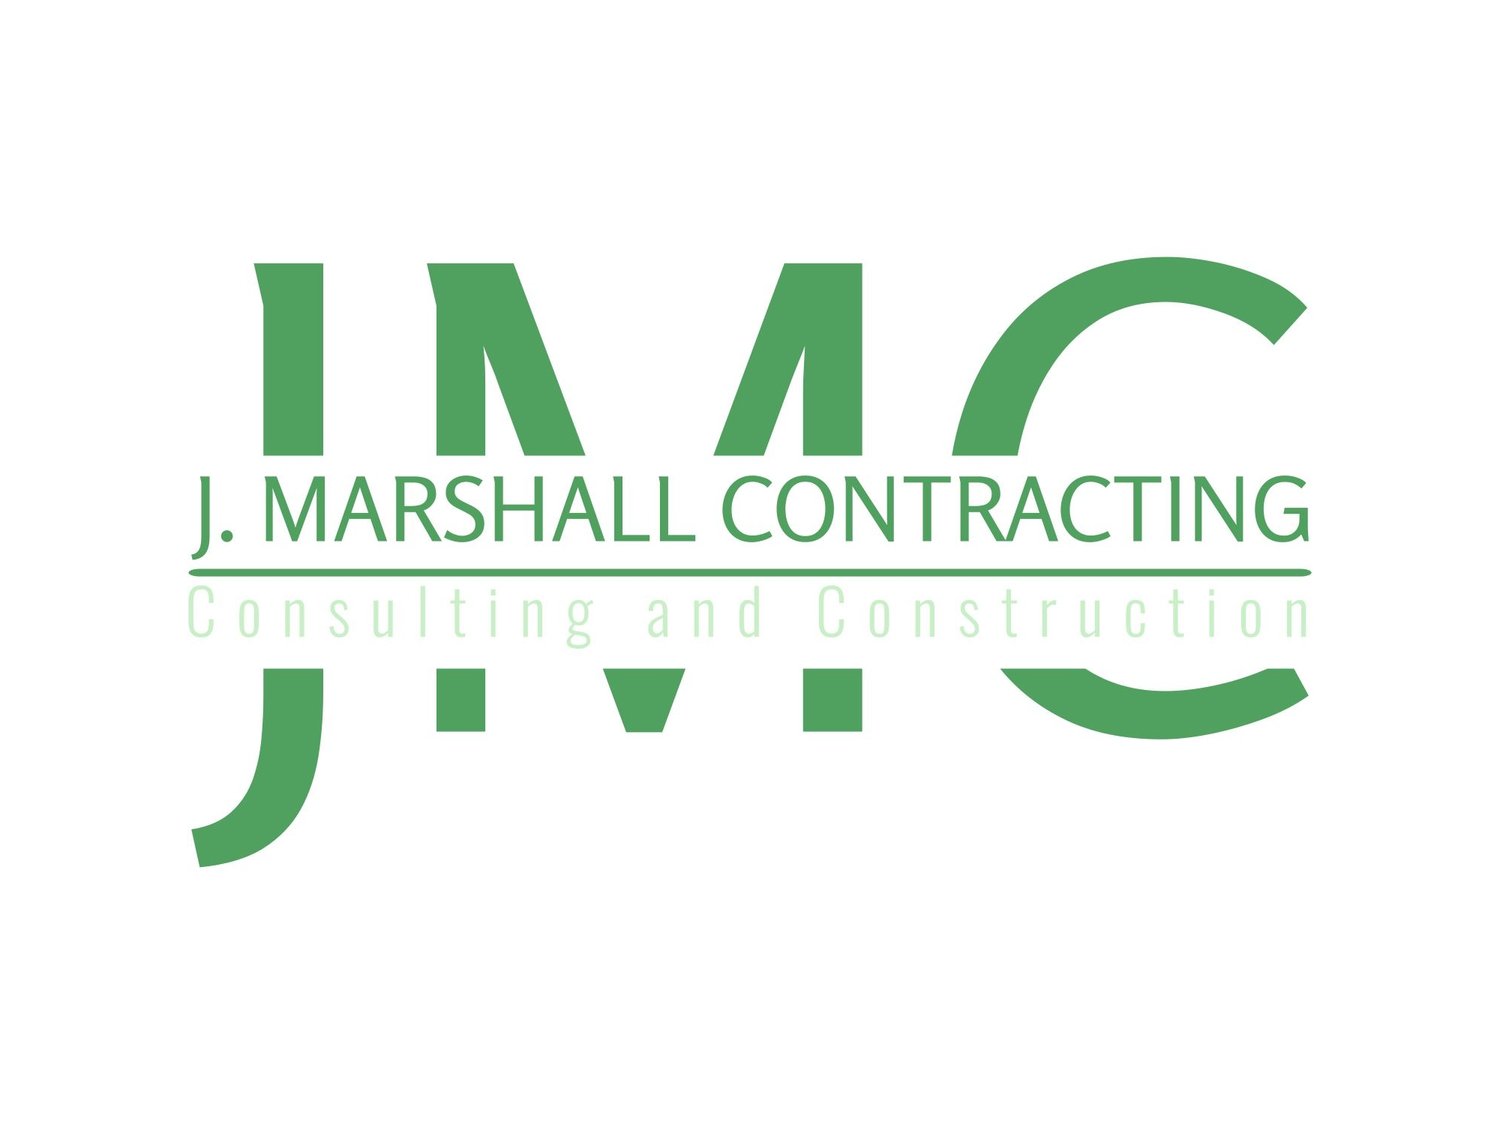 J. MARSHALL CONTRACTING, LLC.